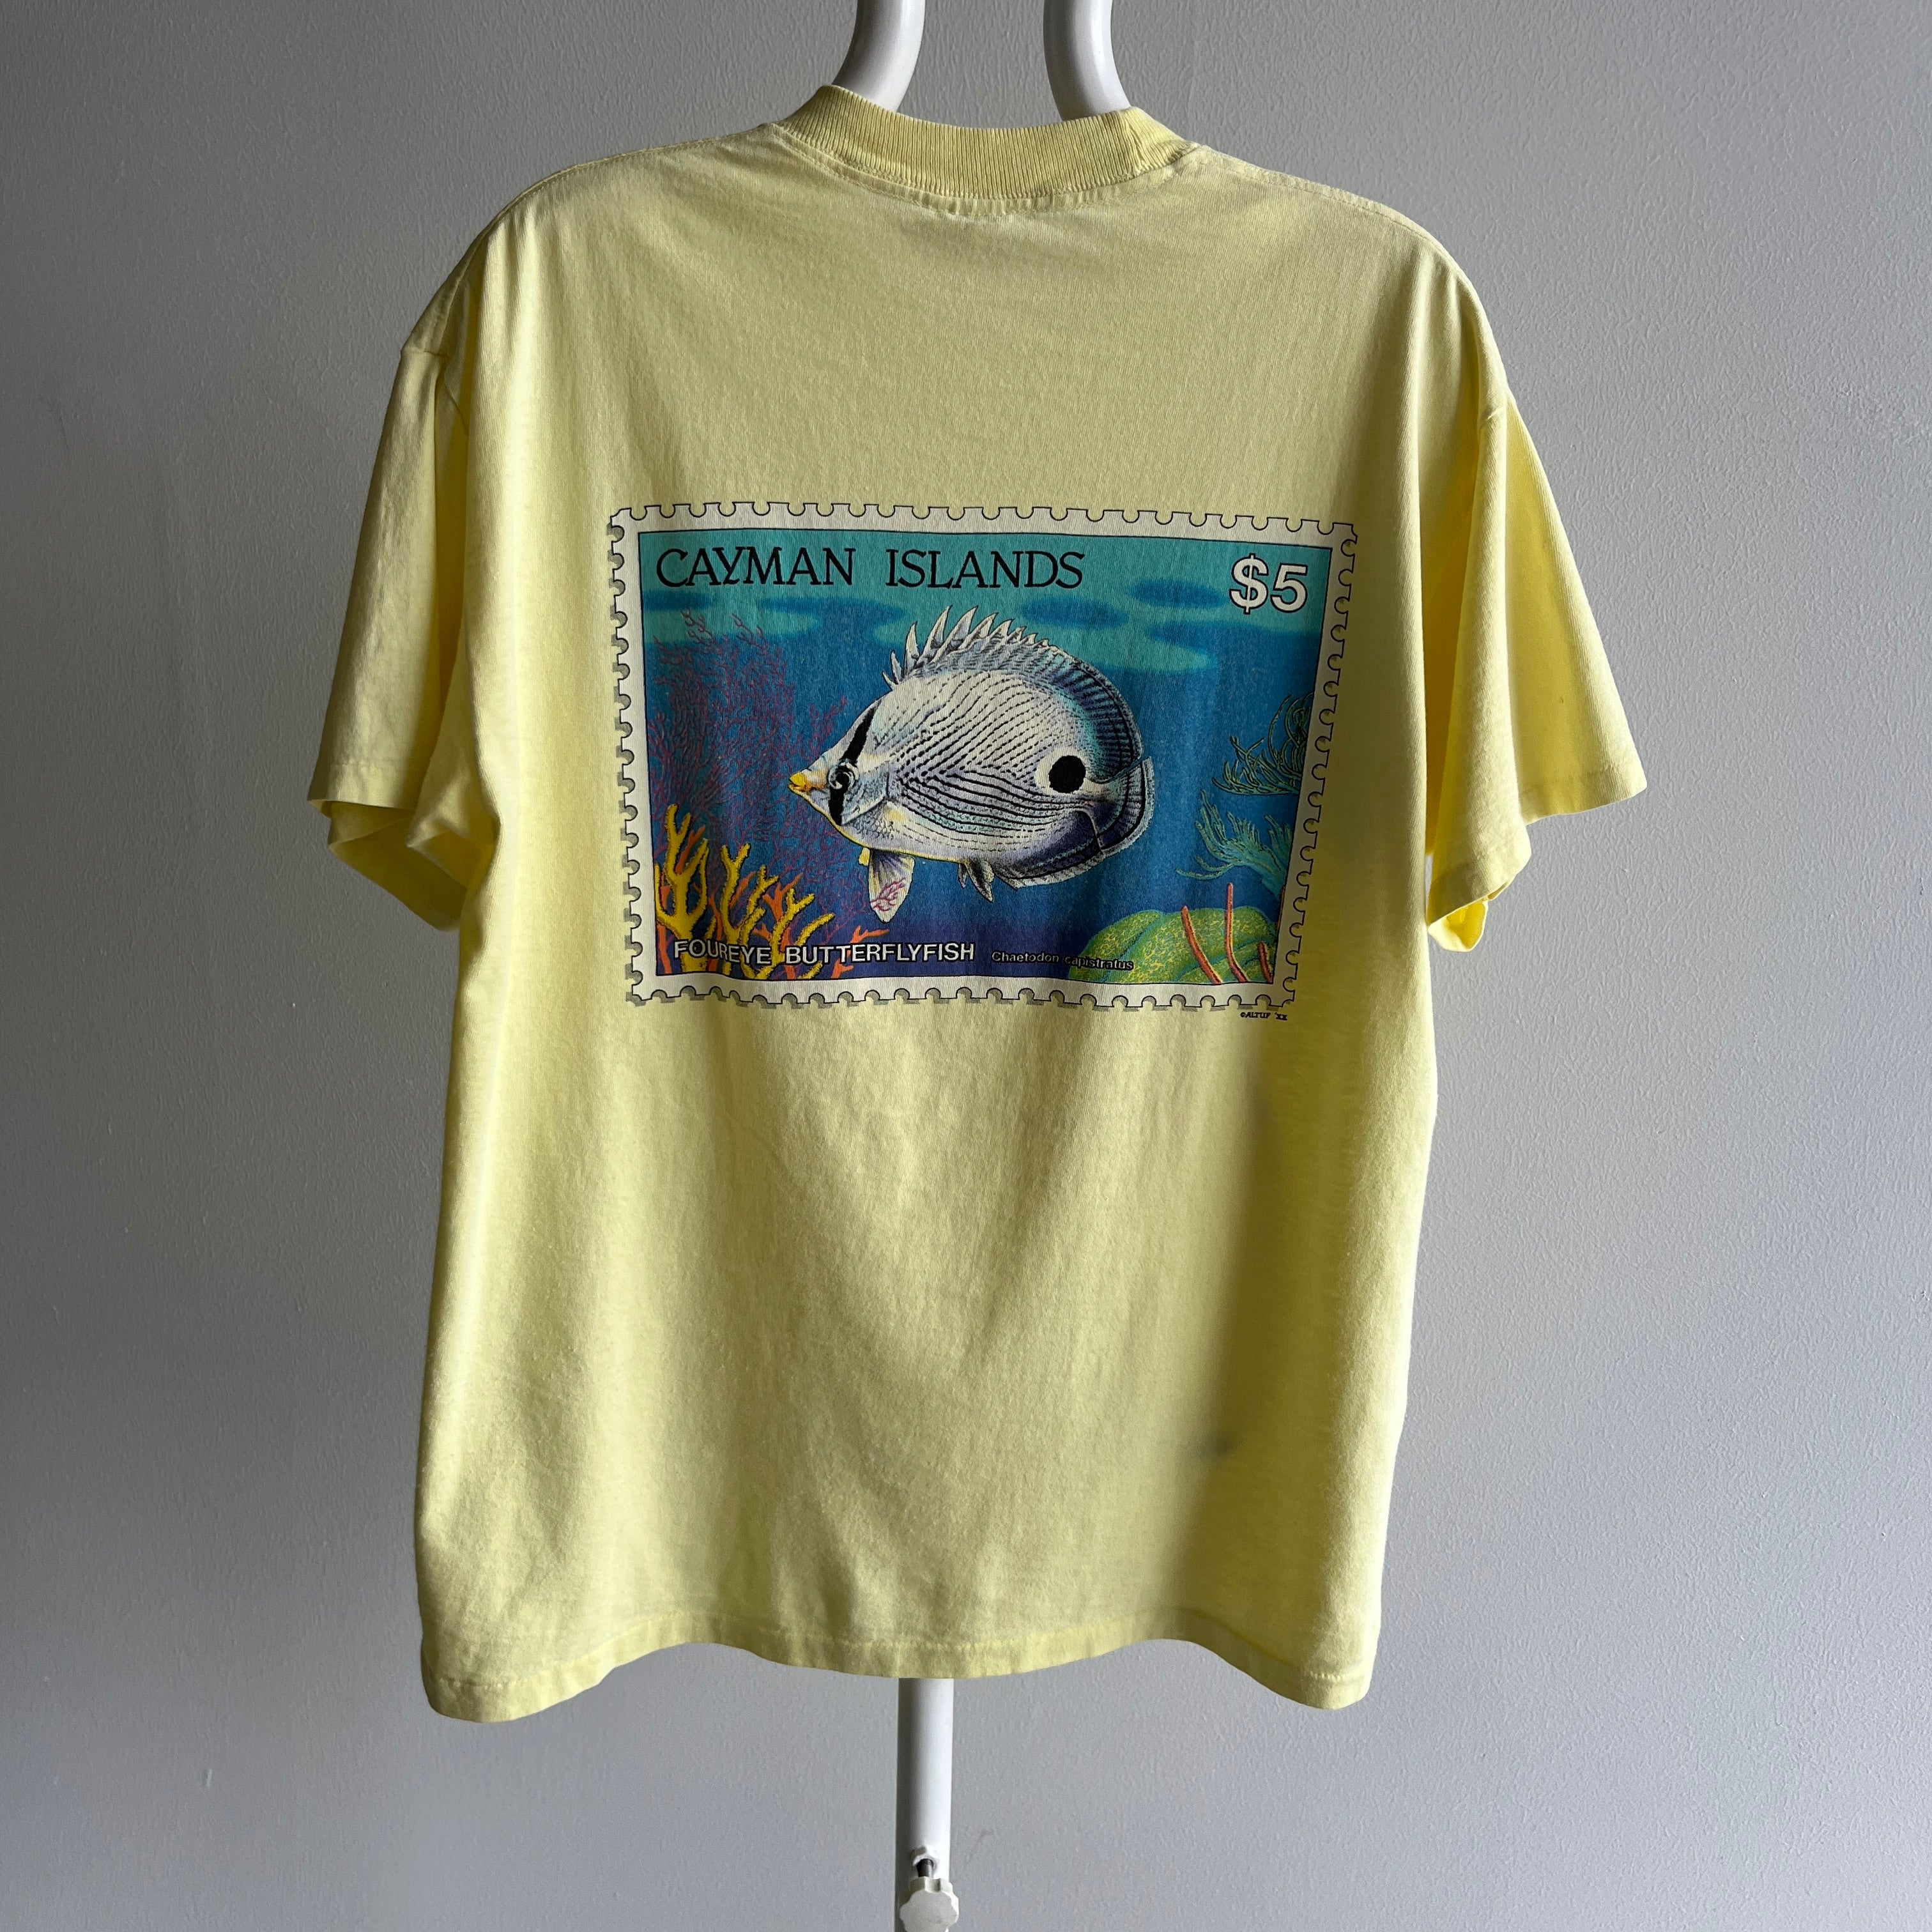 July 4, 1988 Grand Cayman Islands Foureye Butterflyfish T-Shirt